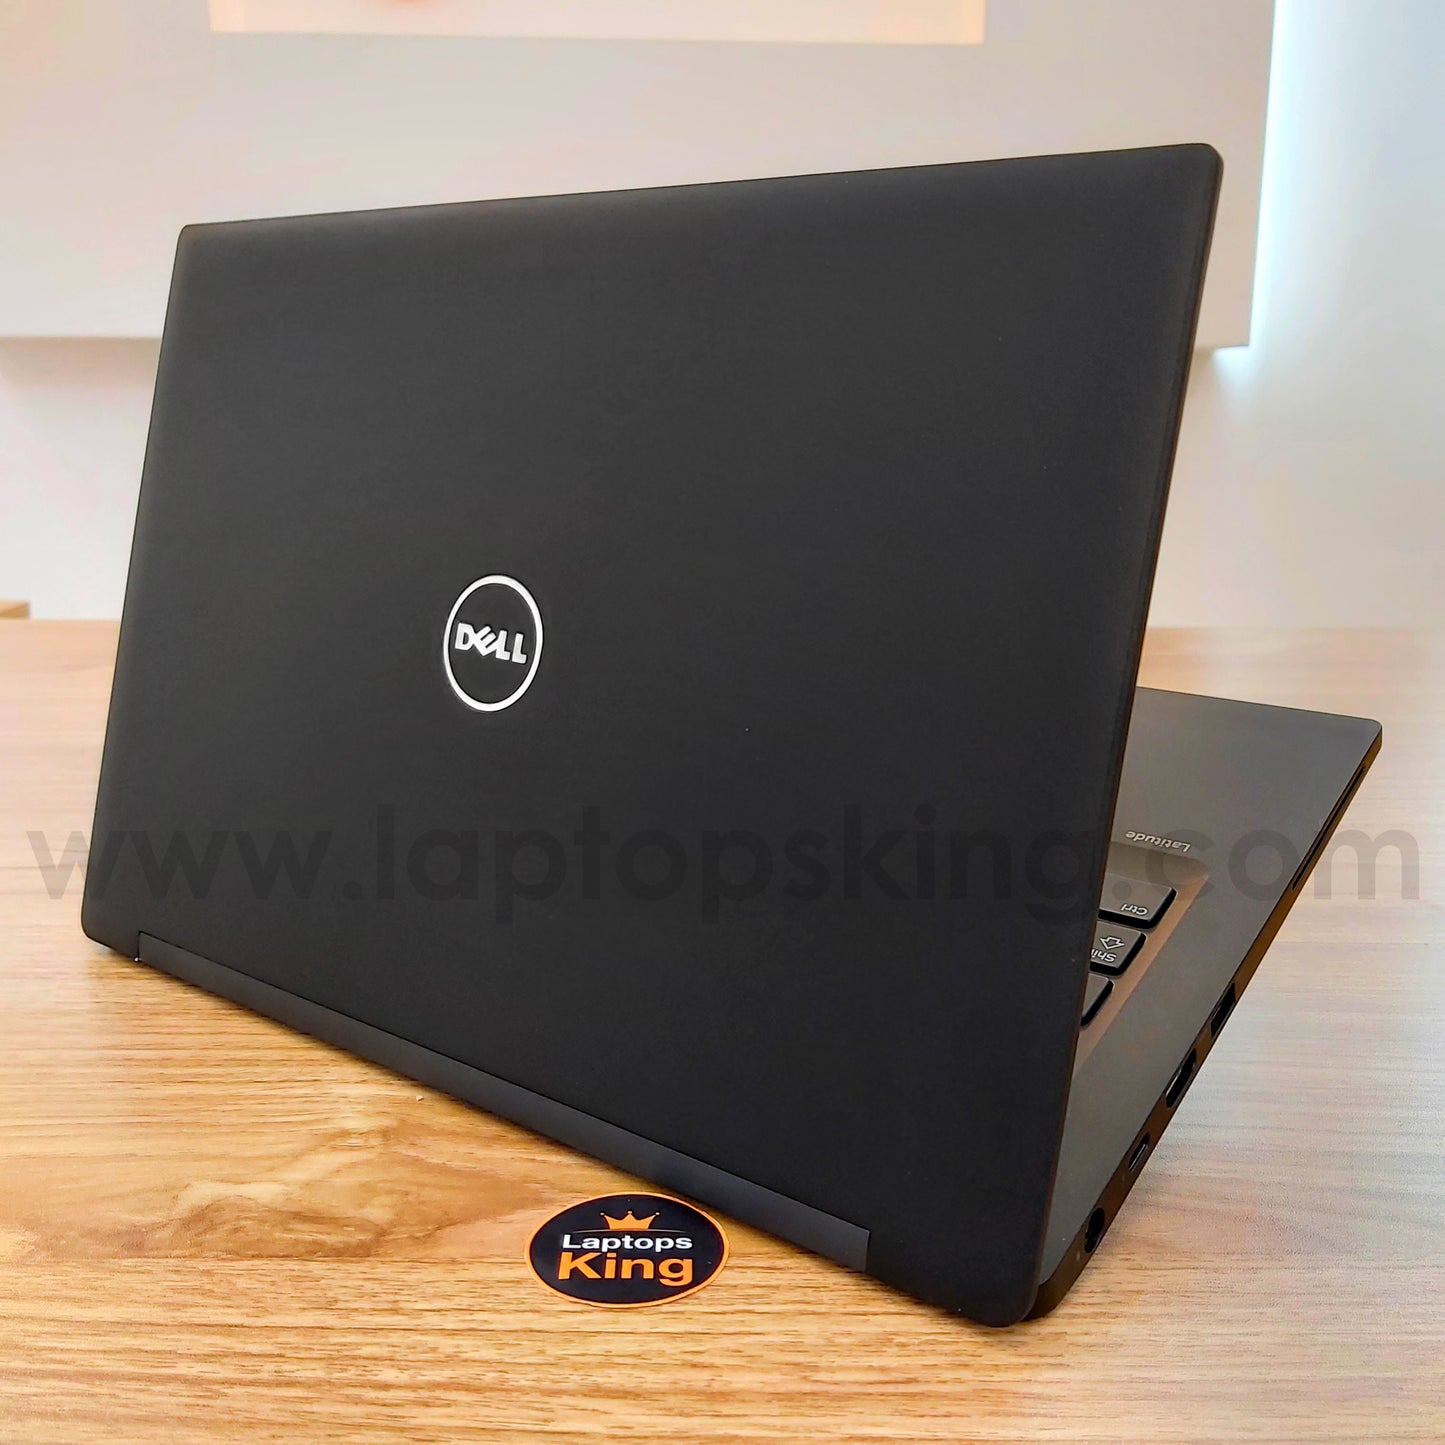 Dell Latitude 7280 i7-6600u 13" Laptop Offers (Open Box)